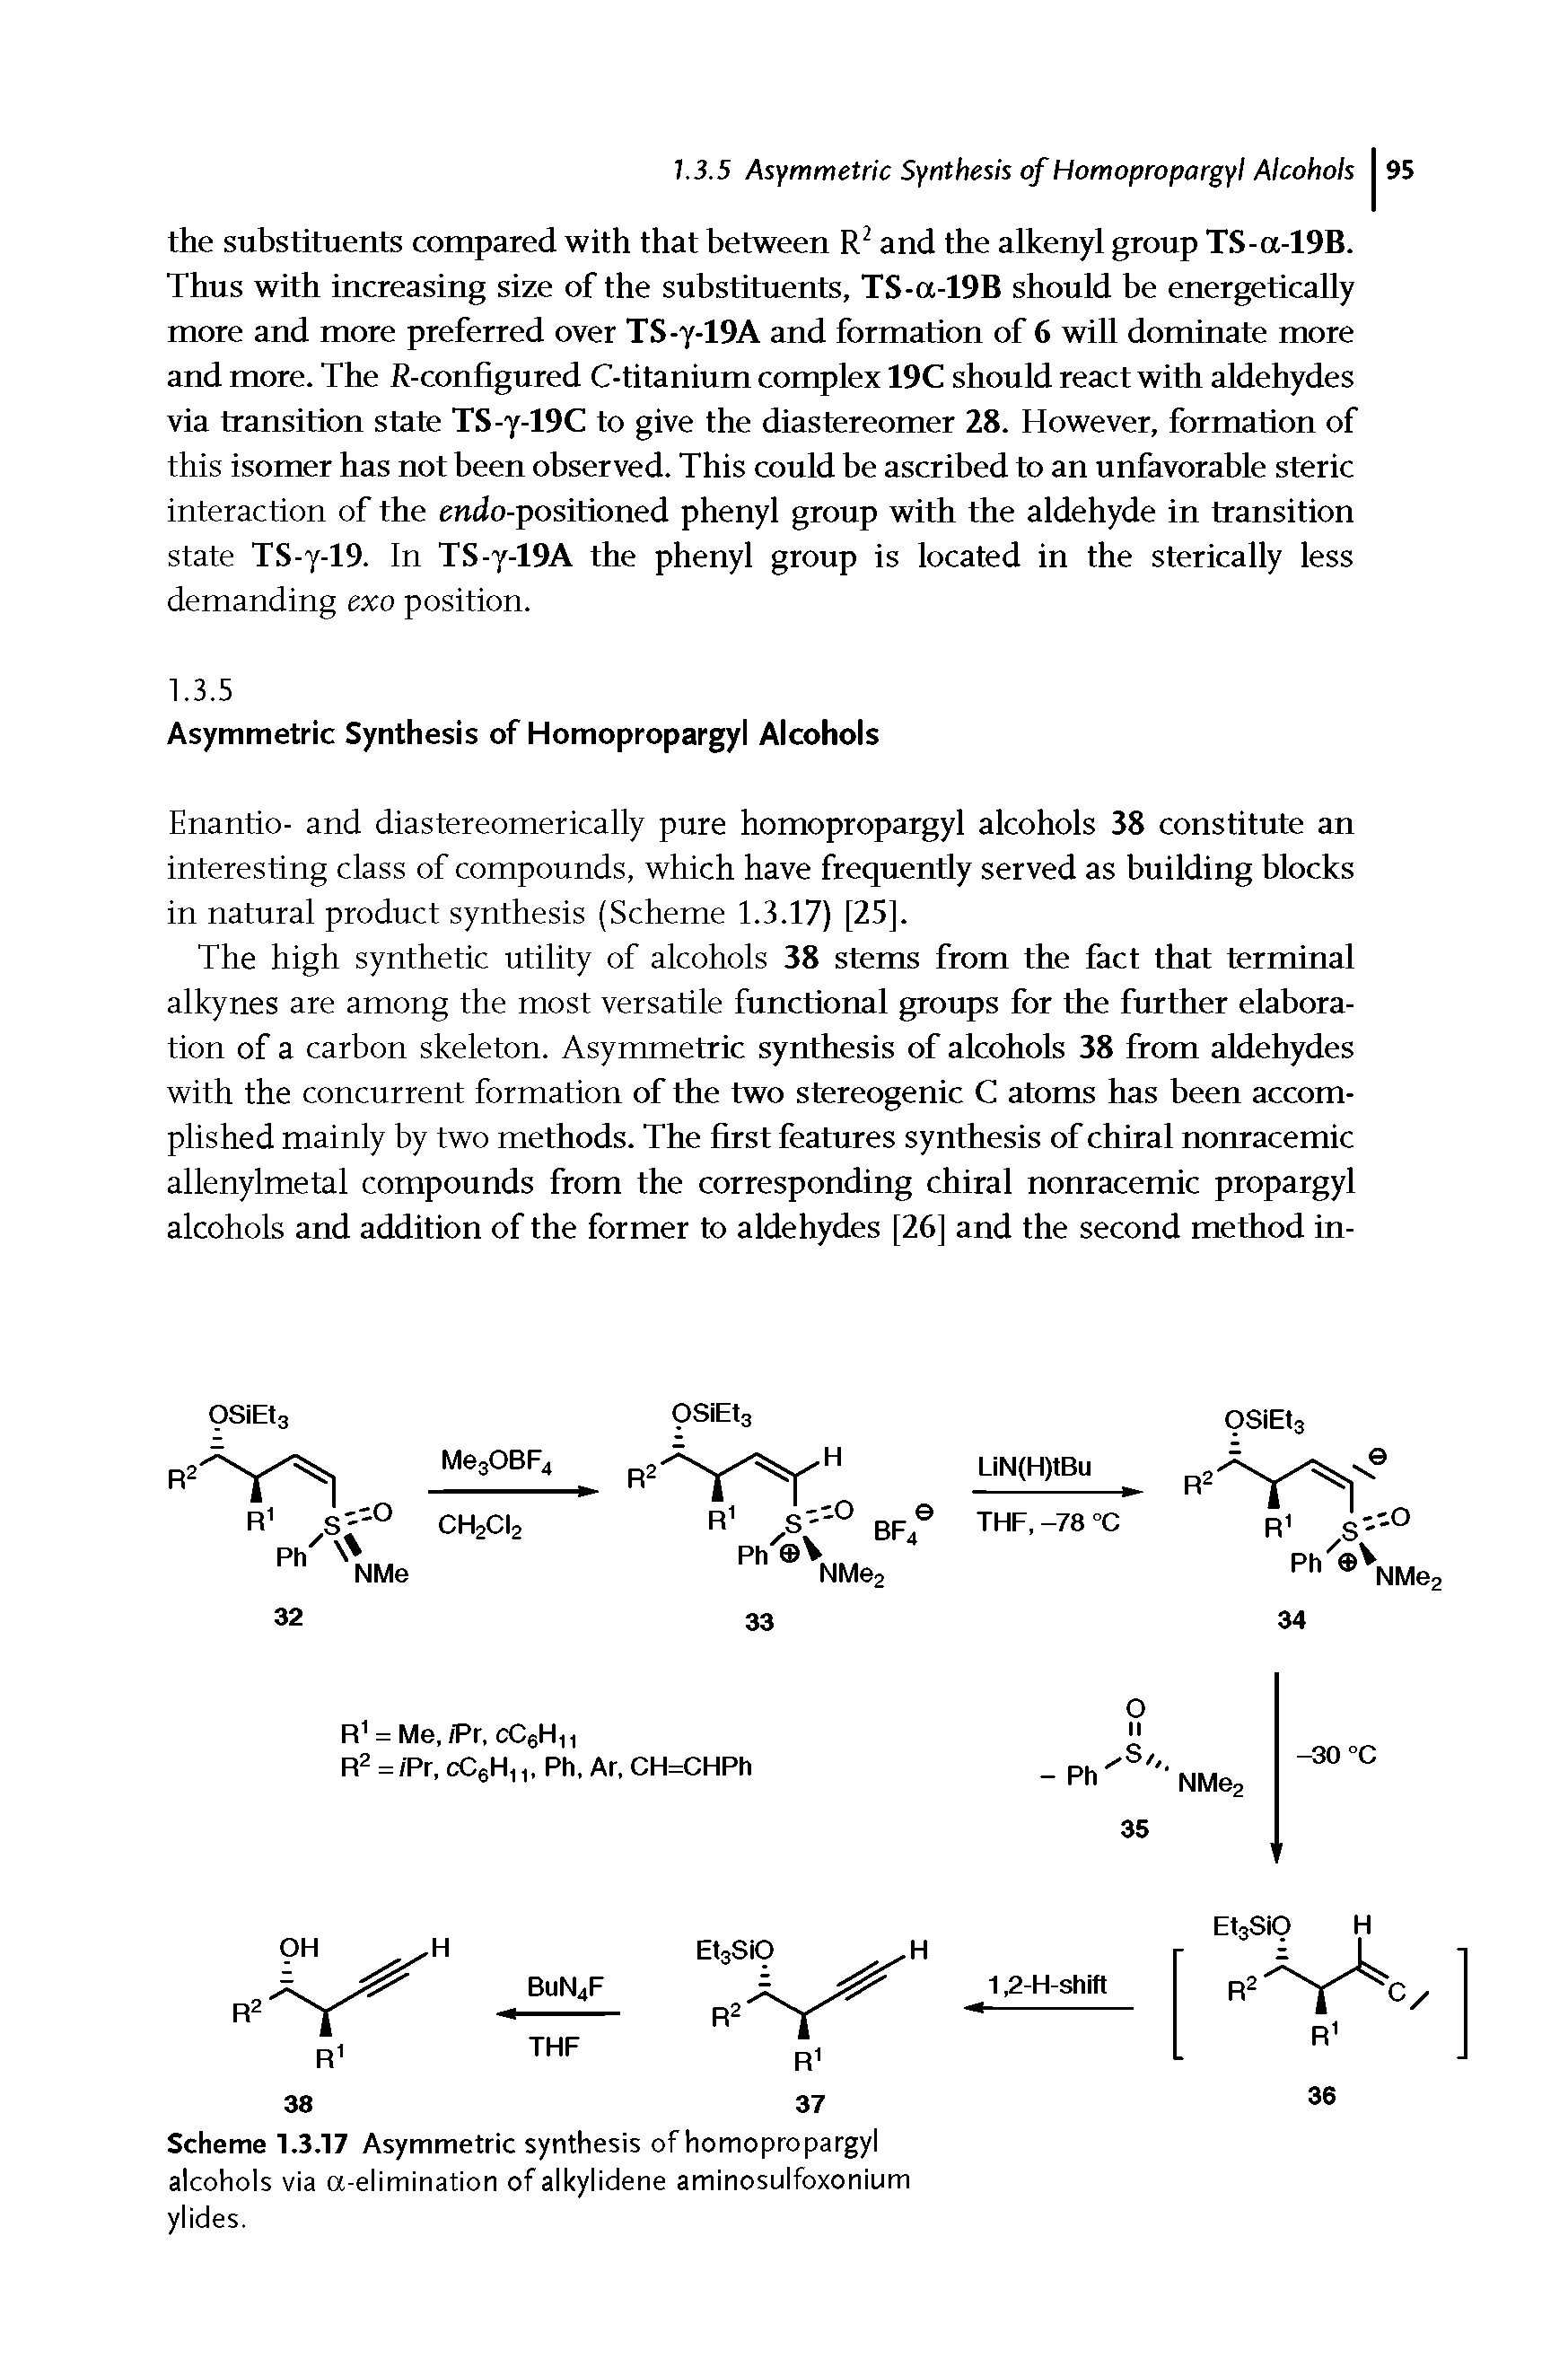 Scheme 1.3.17 Asymmetric synthesis of homopropargyl alcohols via a-elimination of alkylidene aminosulfoxonium ylides.